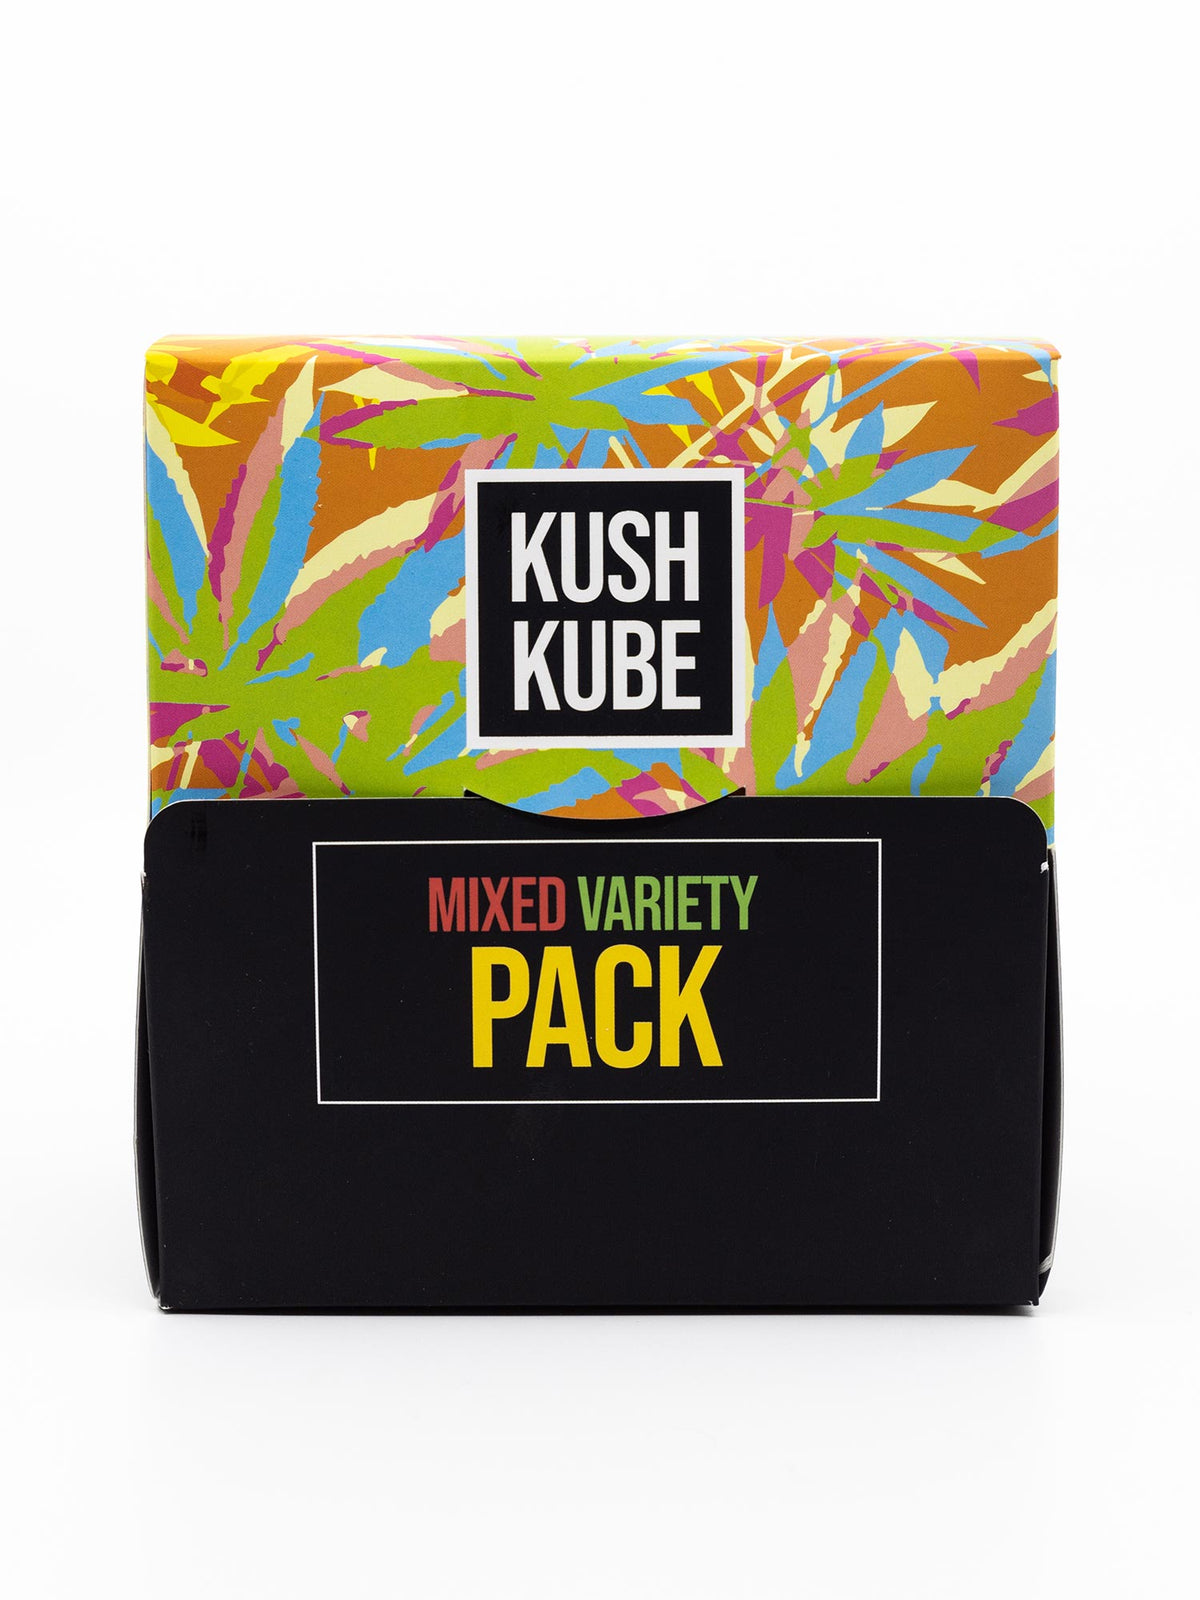 Mixed Variety Pack -  30 - 2 Pack Box